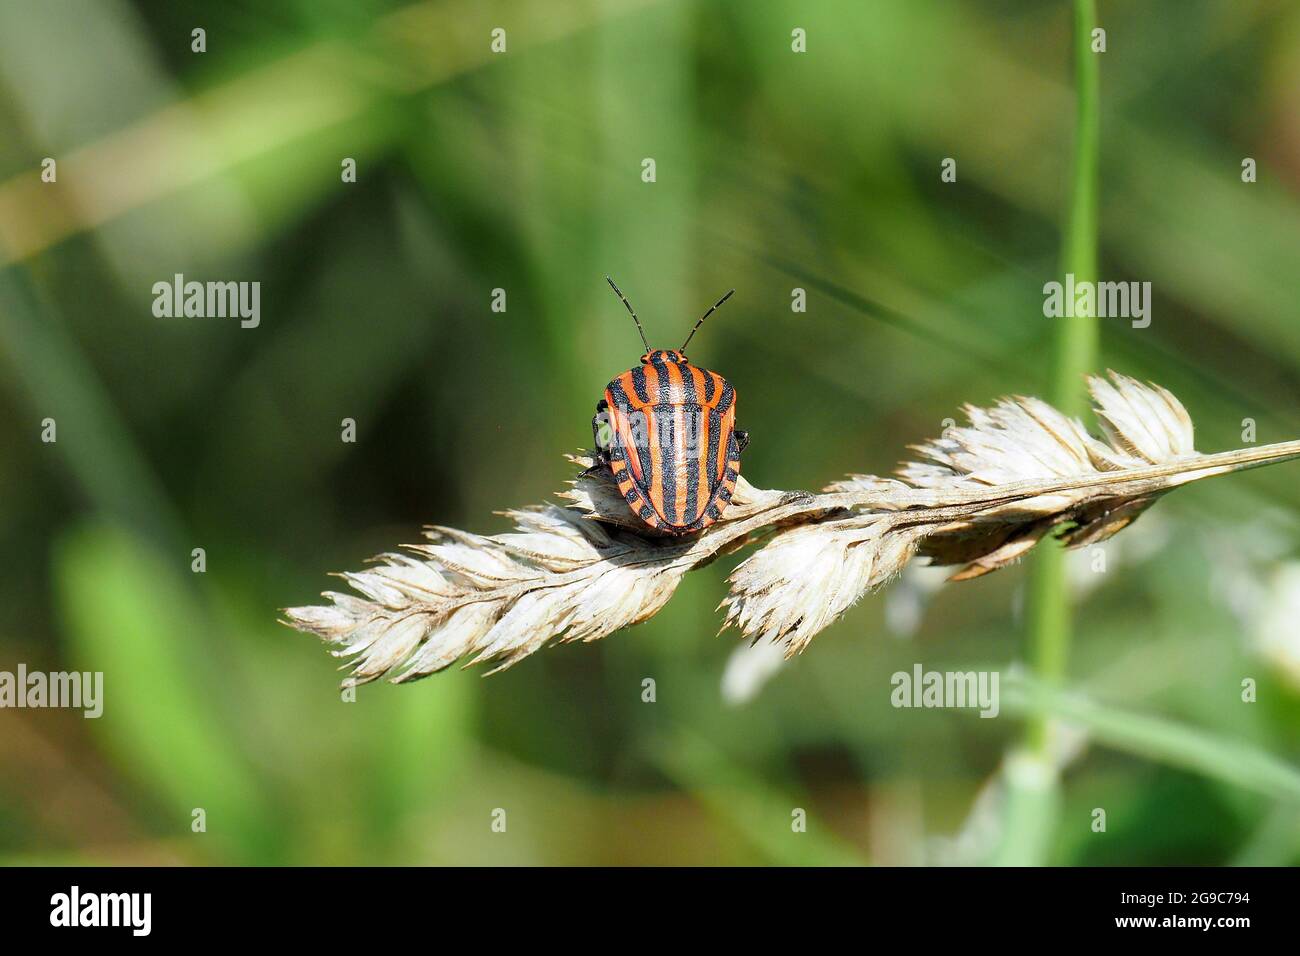 Striped bug, Streifenwanze, Graphosoma lineatum, csíkos pajzsospoloska, Ungheria, Magyarország, Europa Foto Stock